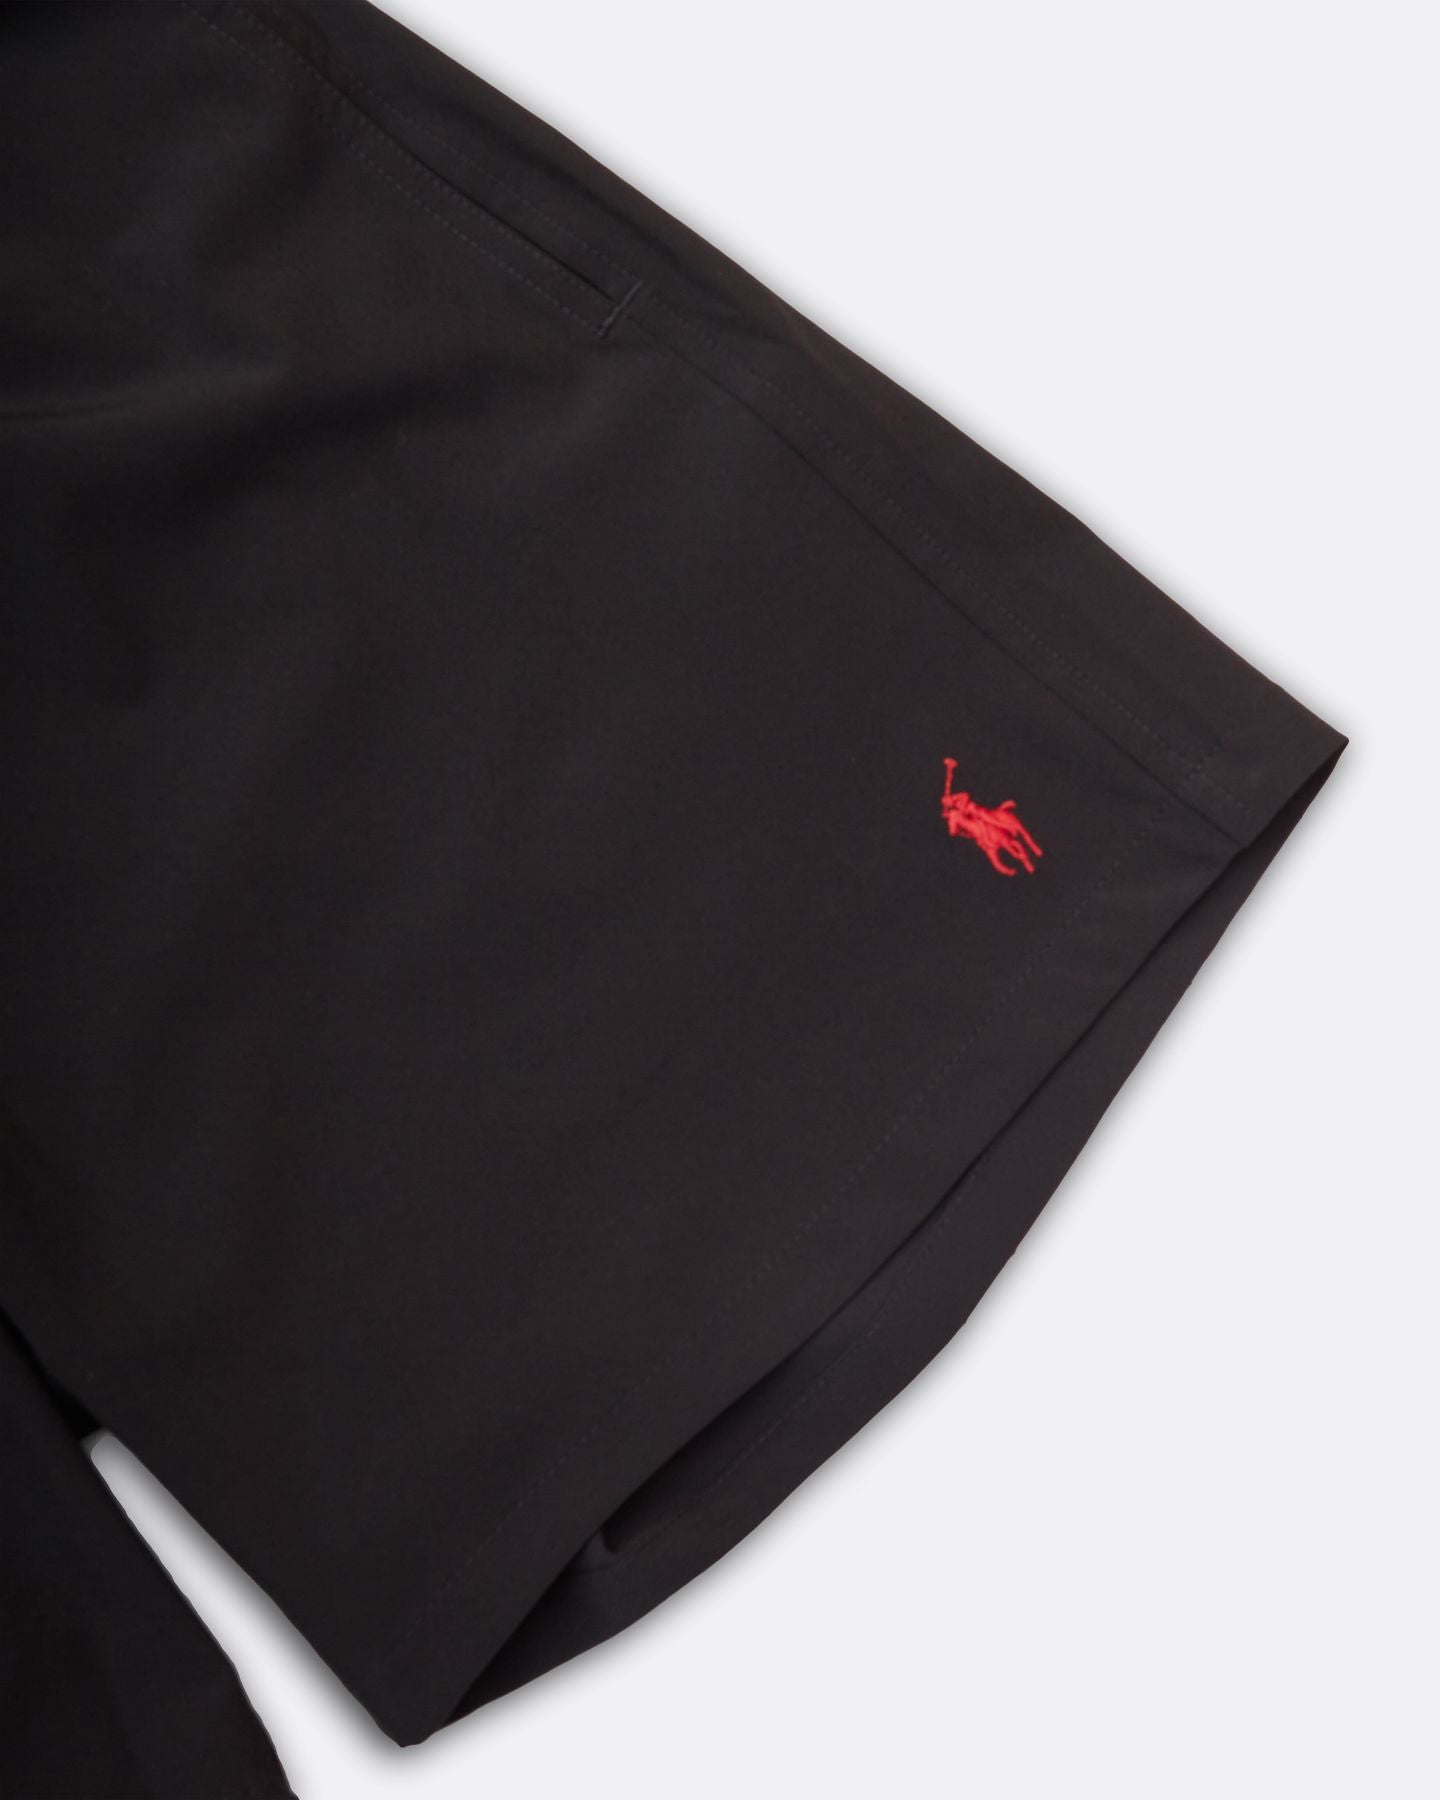 Black Logo Swim Shorts